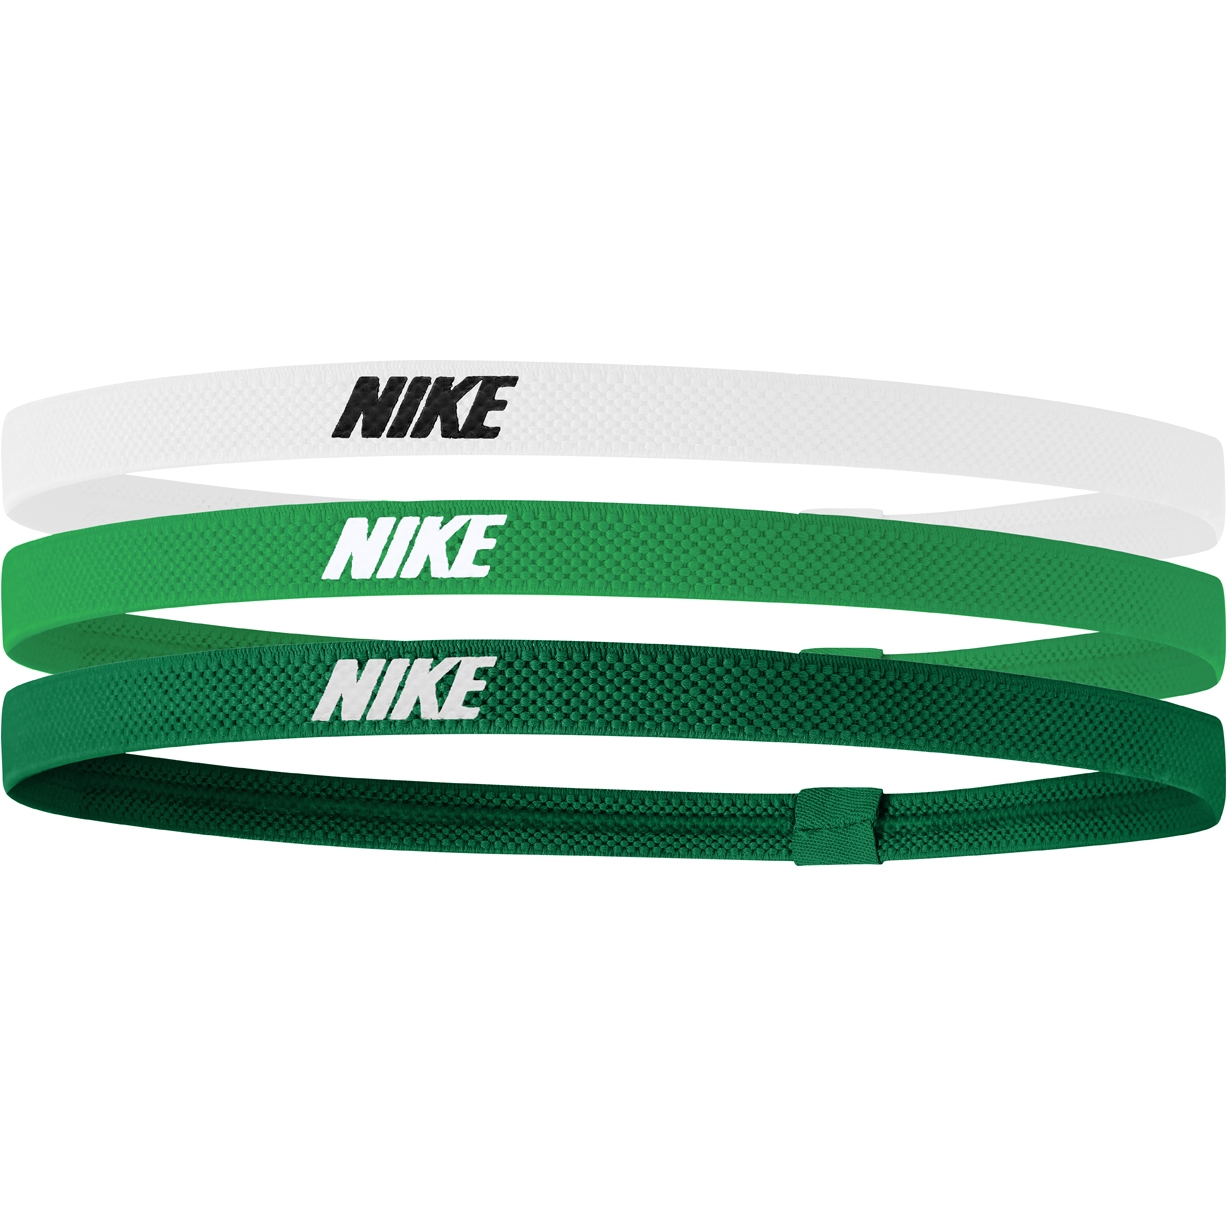 Productfoto van Nike Elastic Hoofdbanden 2.0 (Set van 3) - white/stadium green/black 146